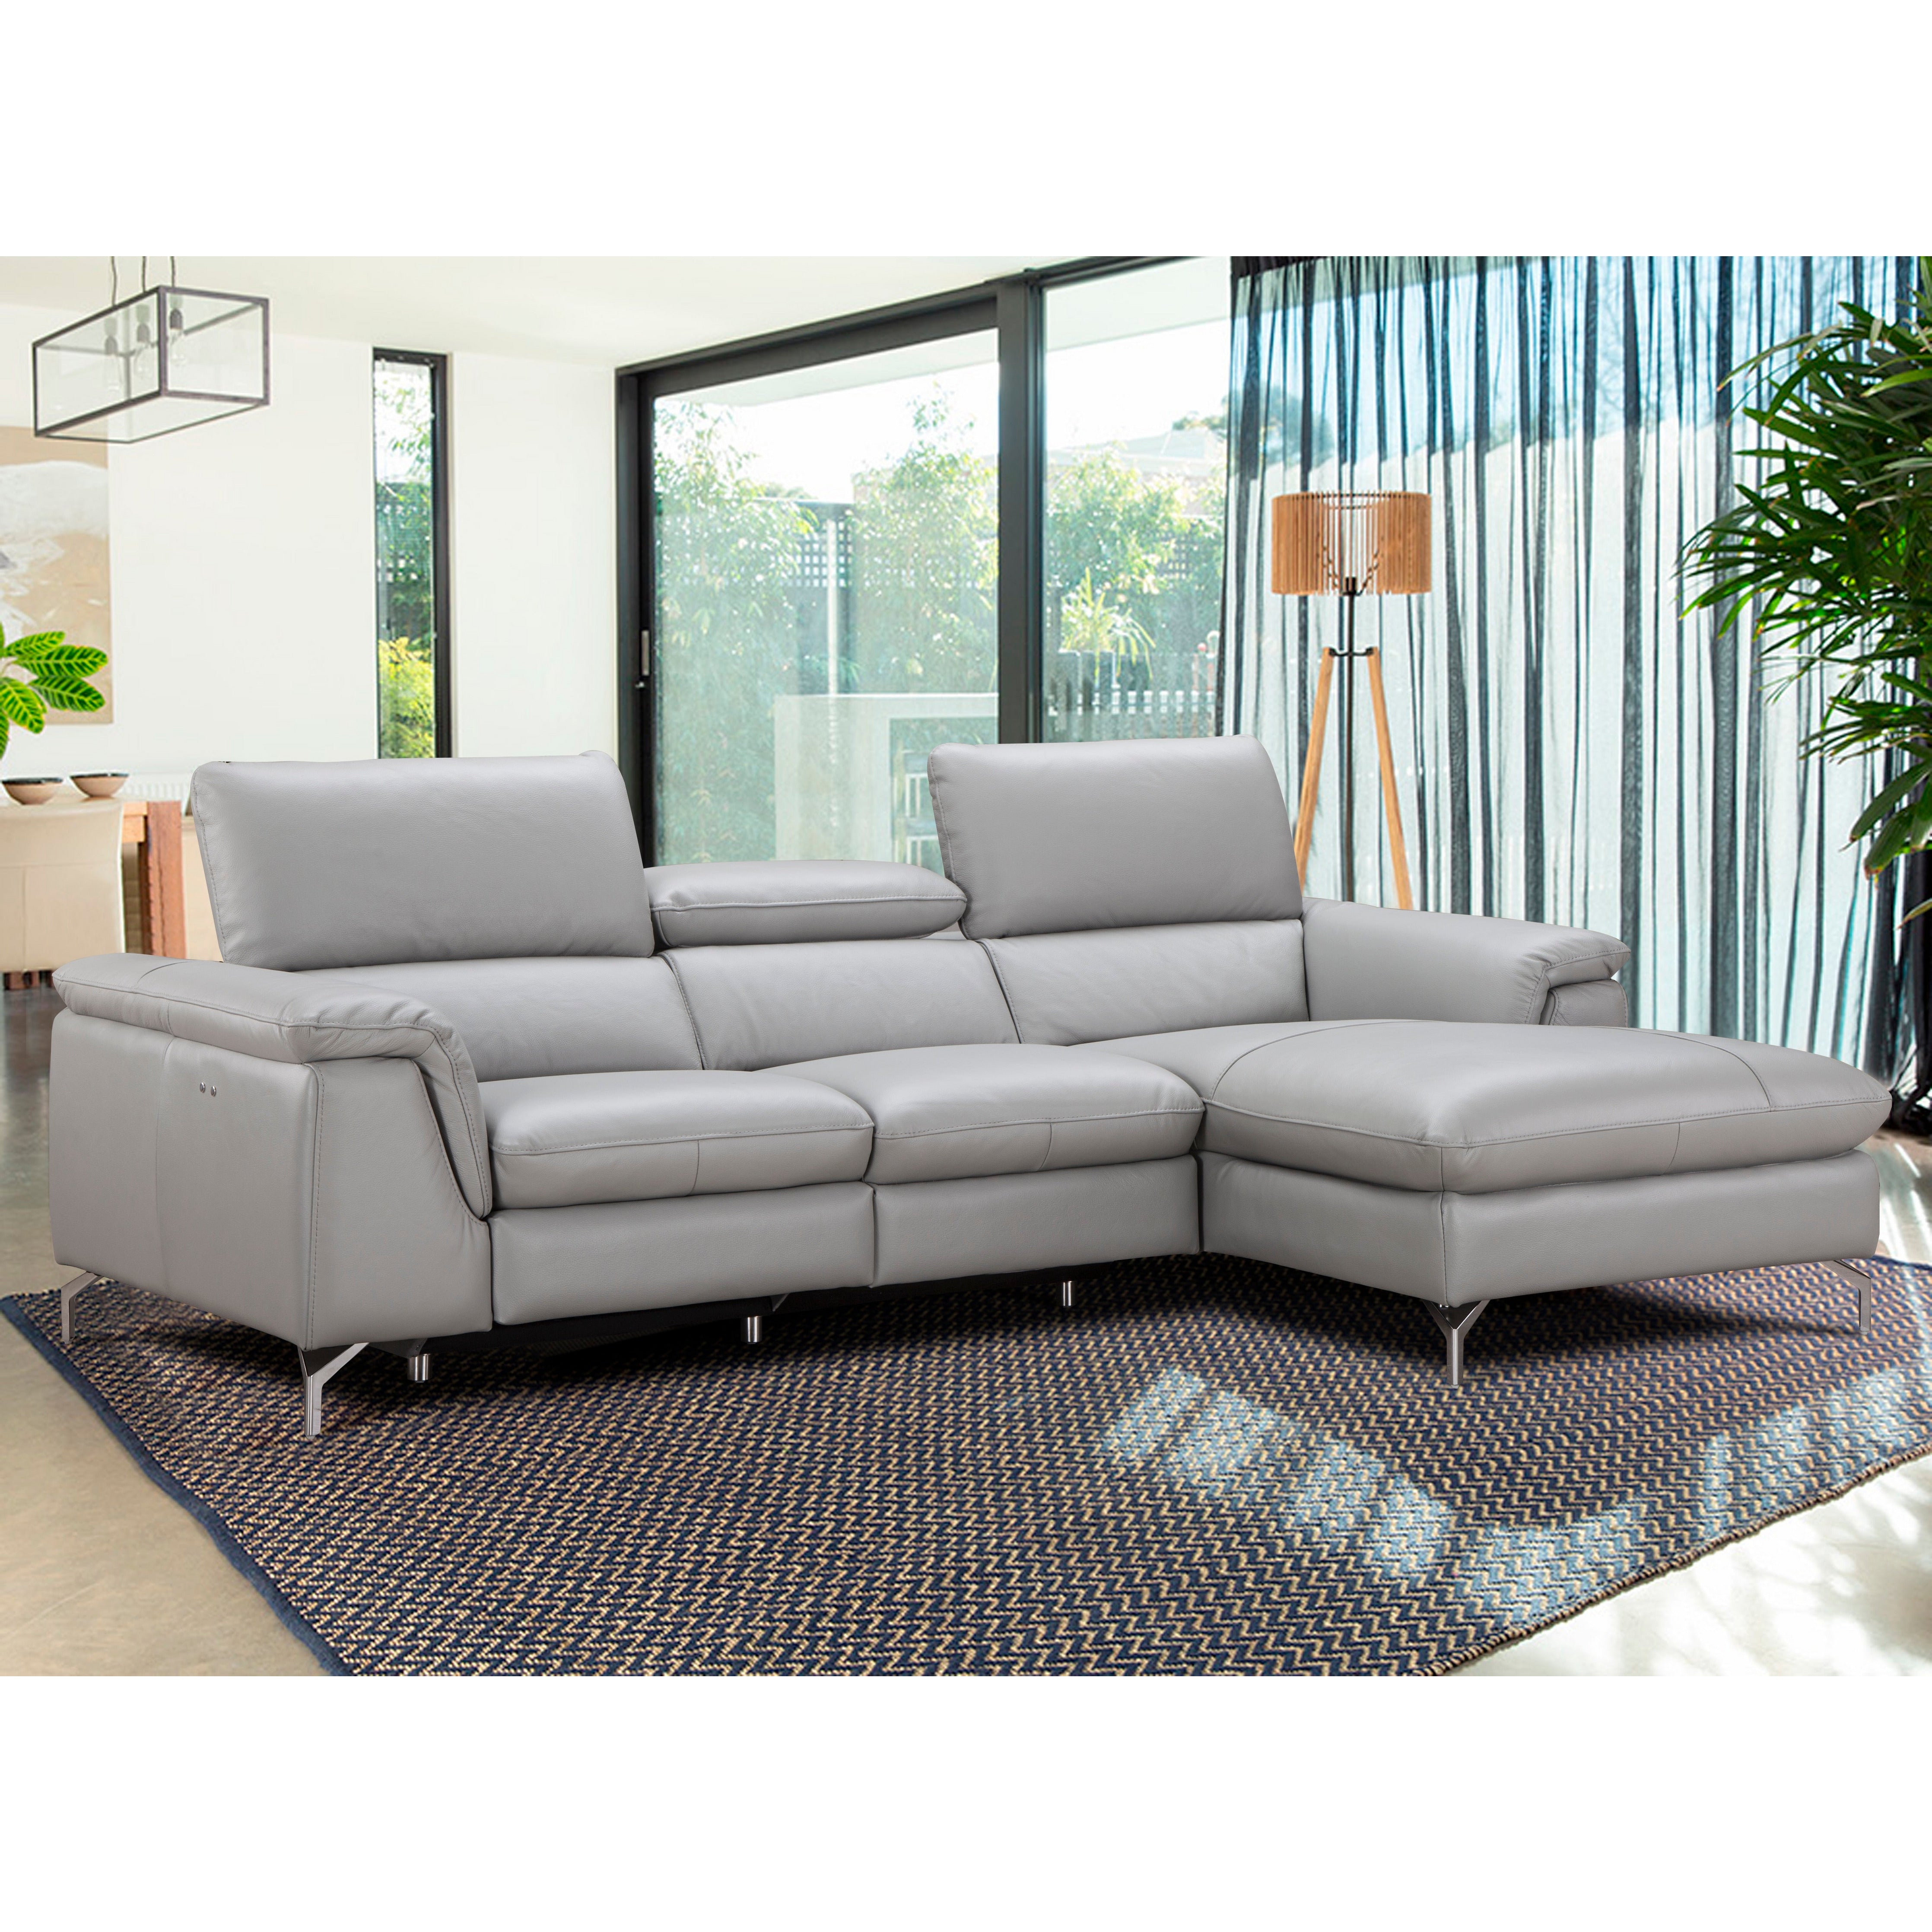 J&M Furniture Serena Premium Leather Sectional (SKU18234)